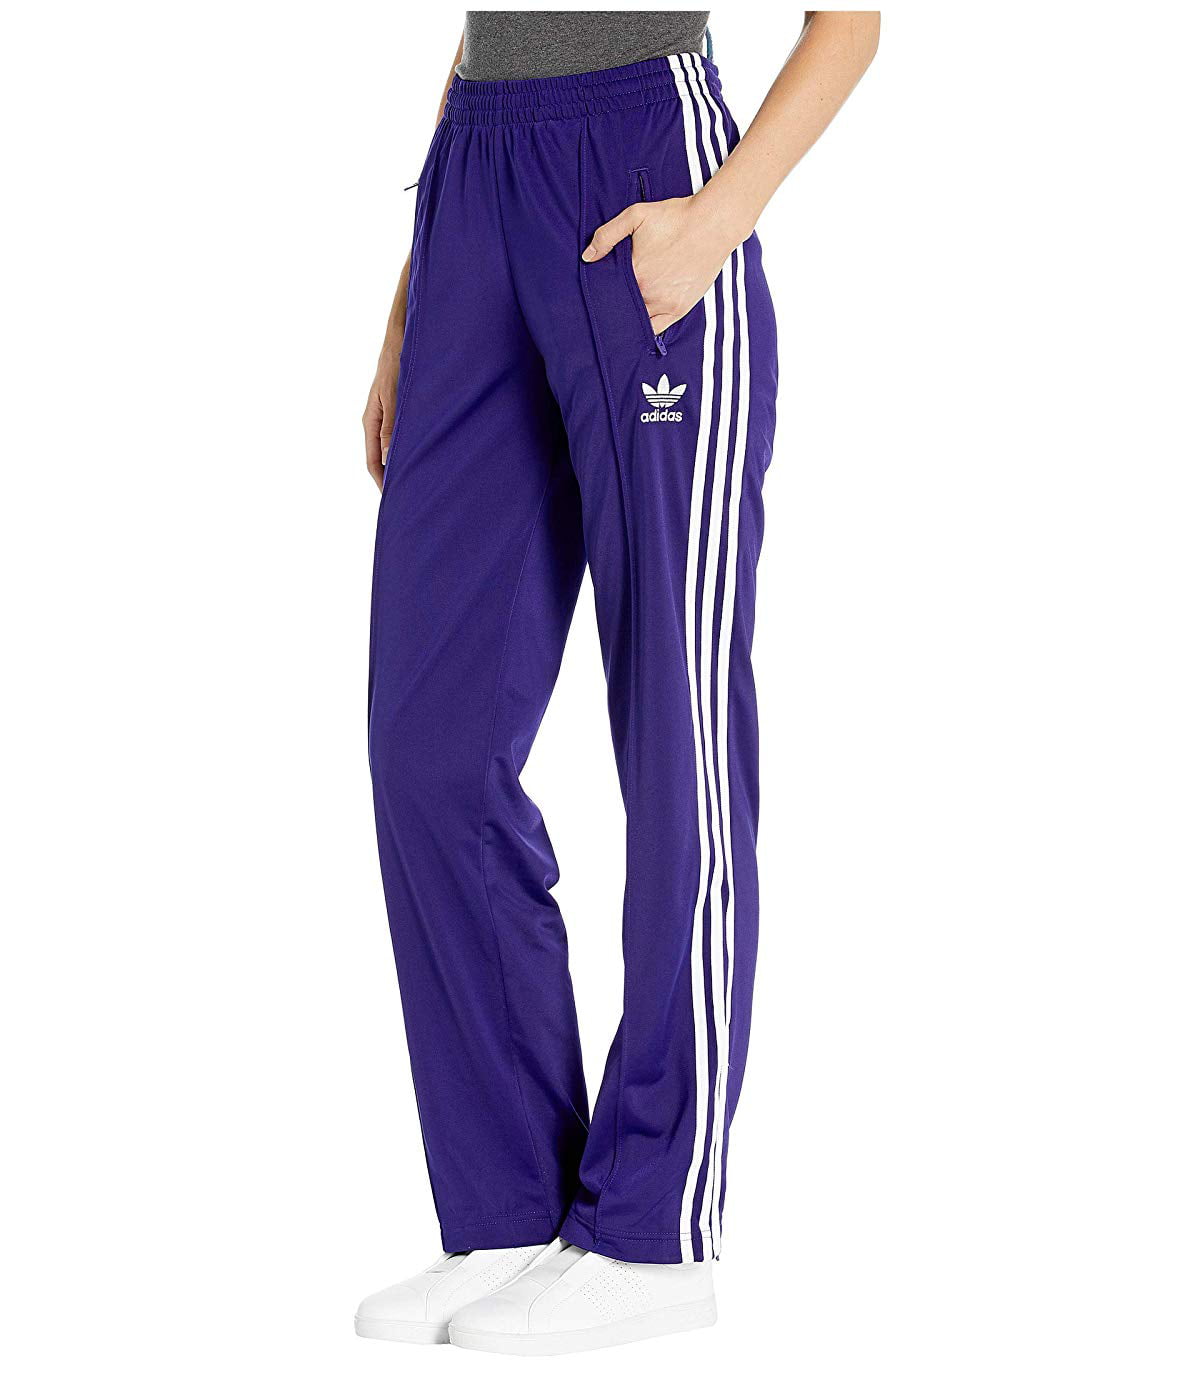 Pants Firebird Collegiate Originals Track adidas Purple